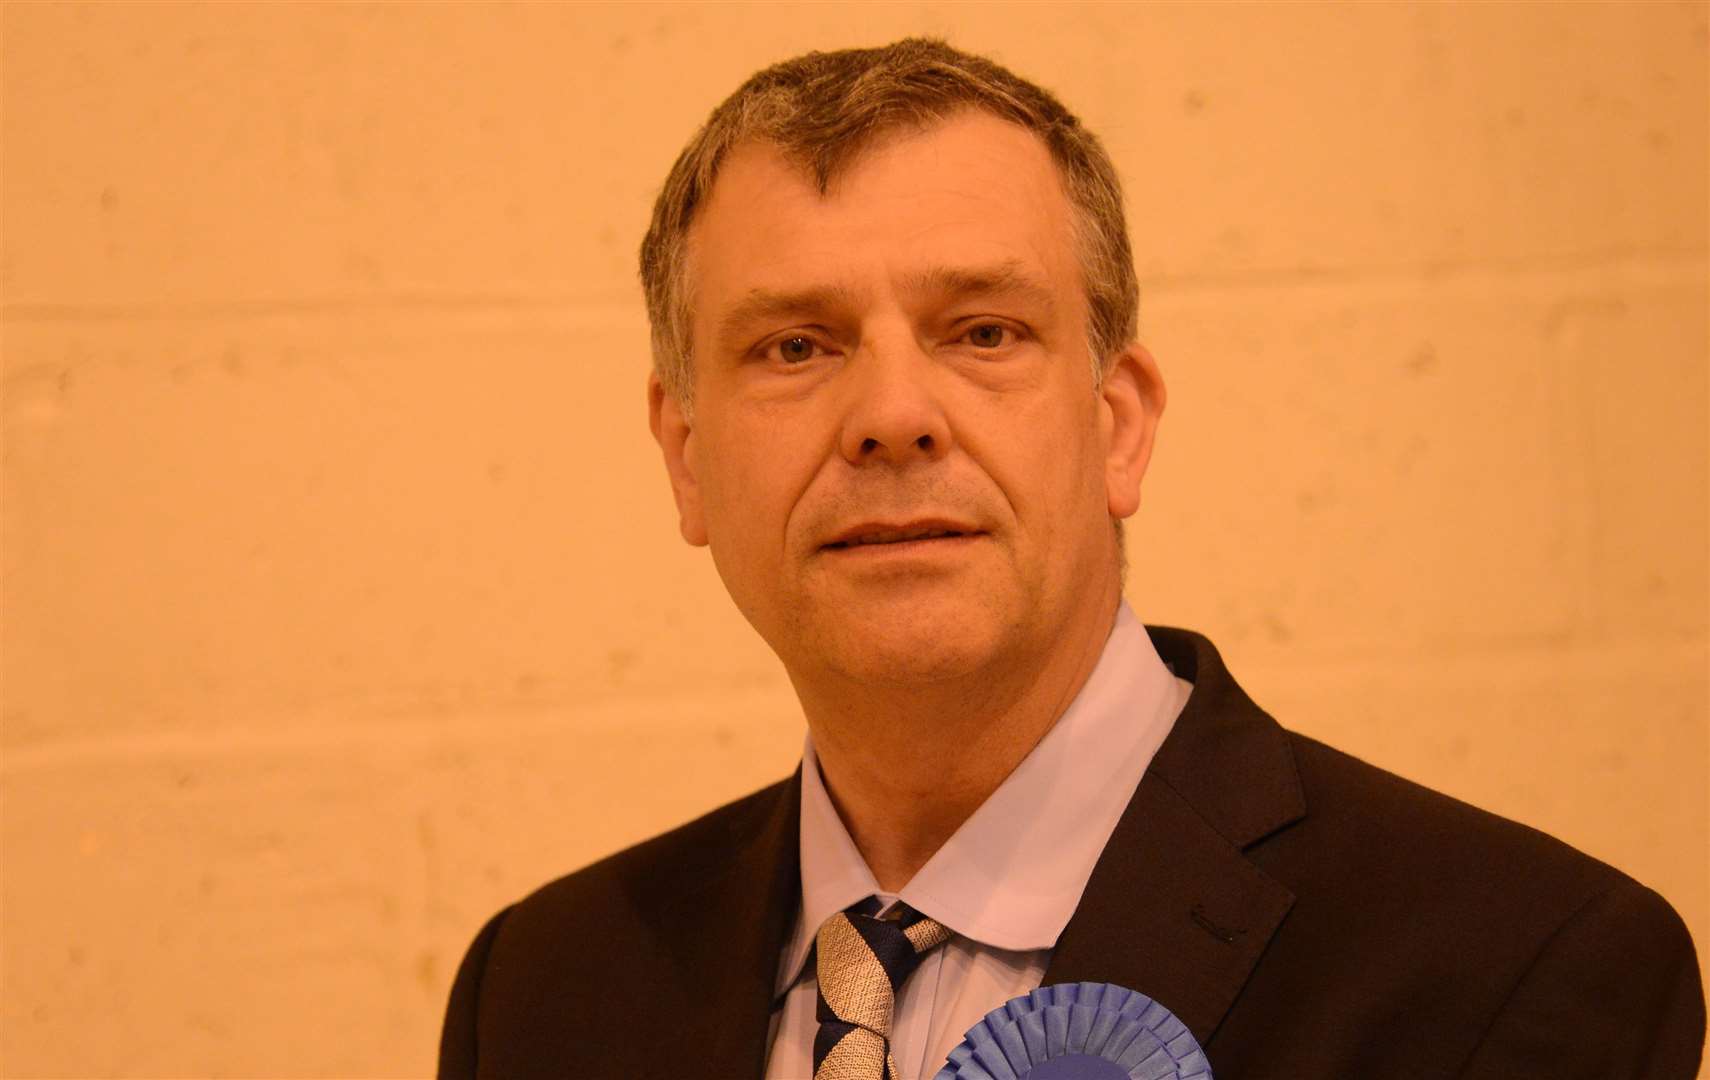 Cllr Paul Bartlett represents the Sevington ward on Ashford Borough Council